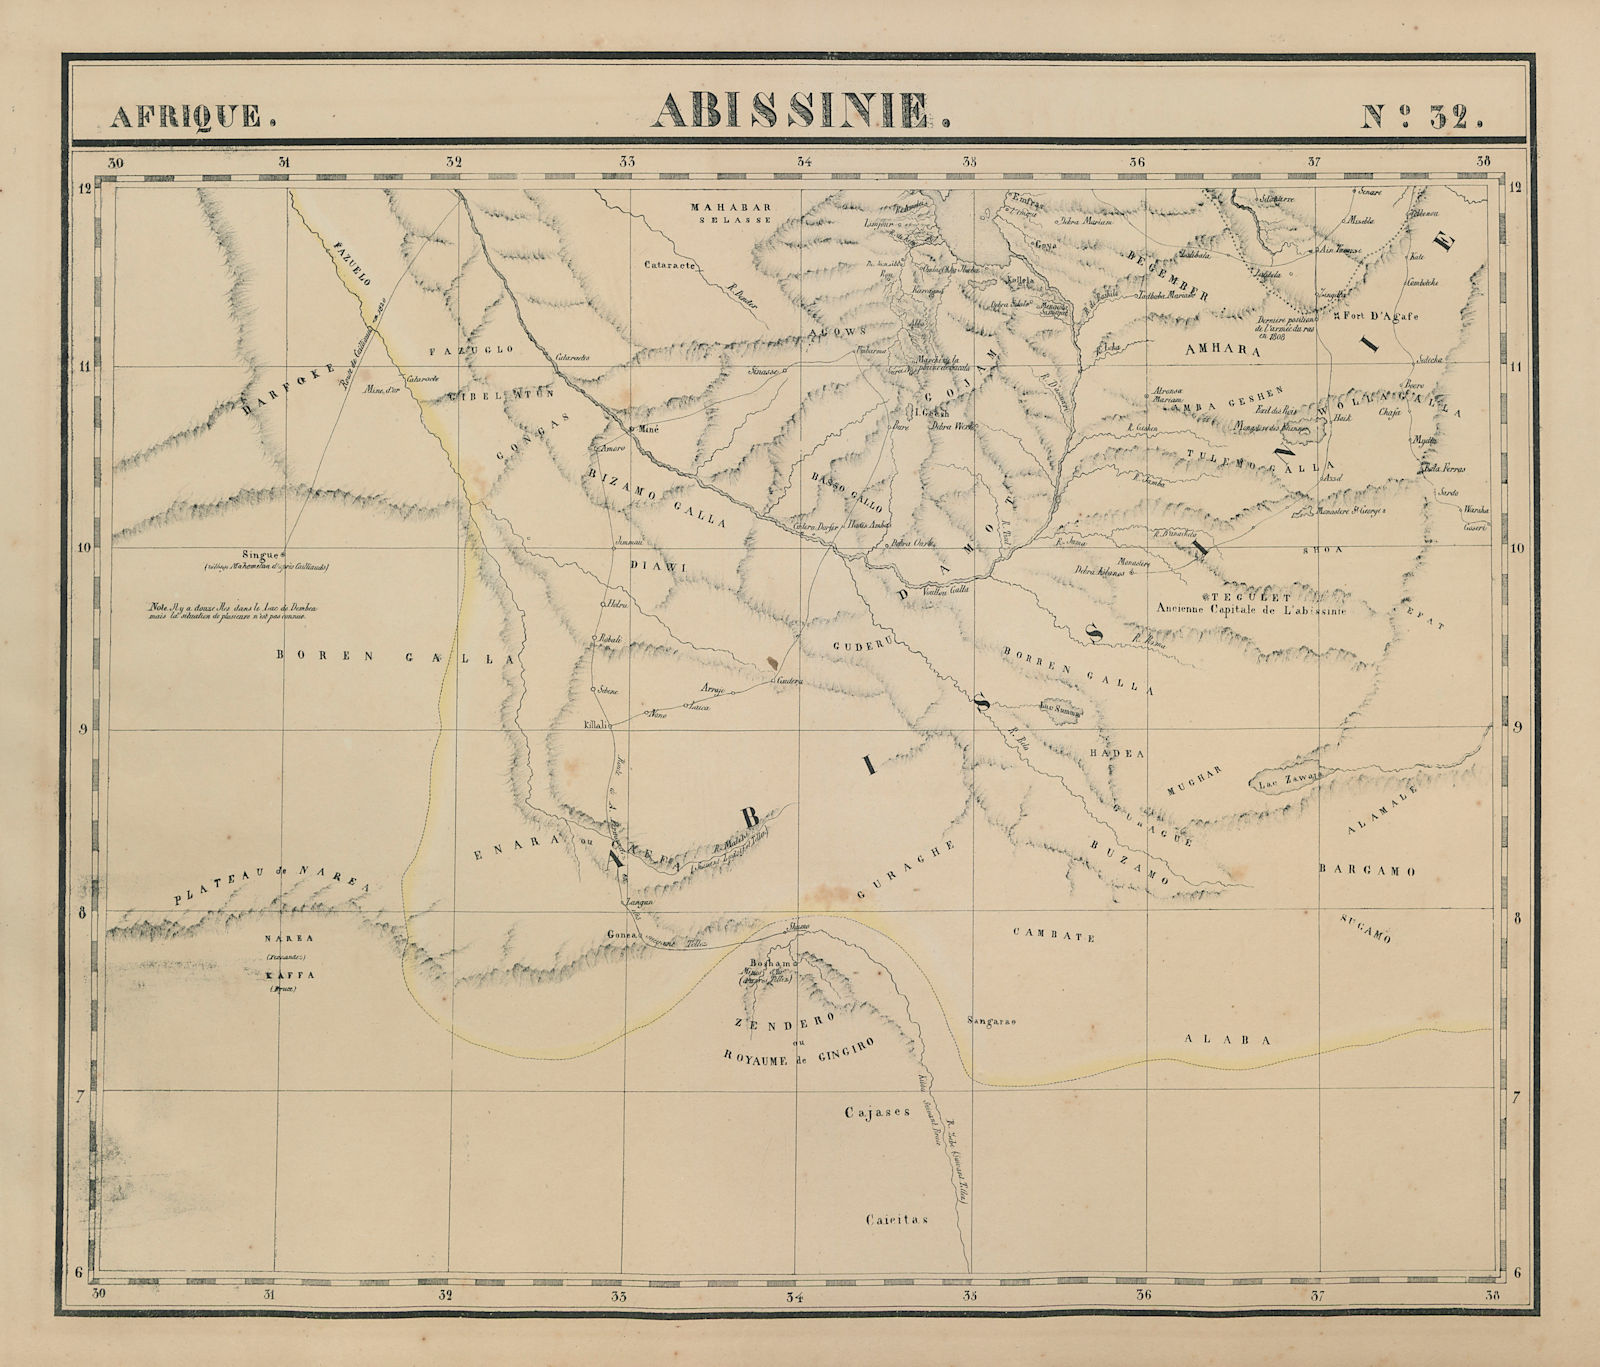 Associate Product Afrique. Abissinie #32. Western Ethiopia. Blue Nile. VANDERMAELEN 1827 old map